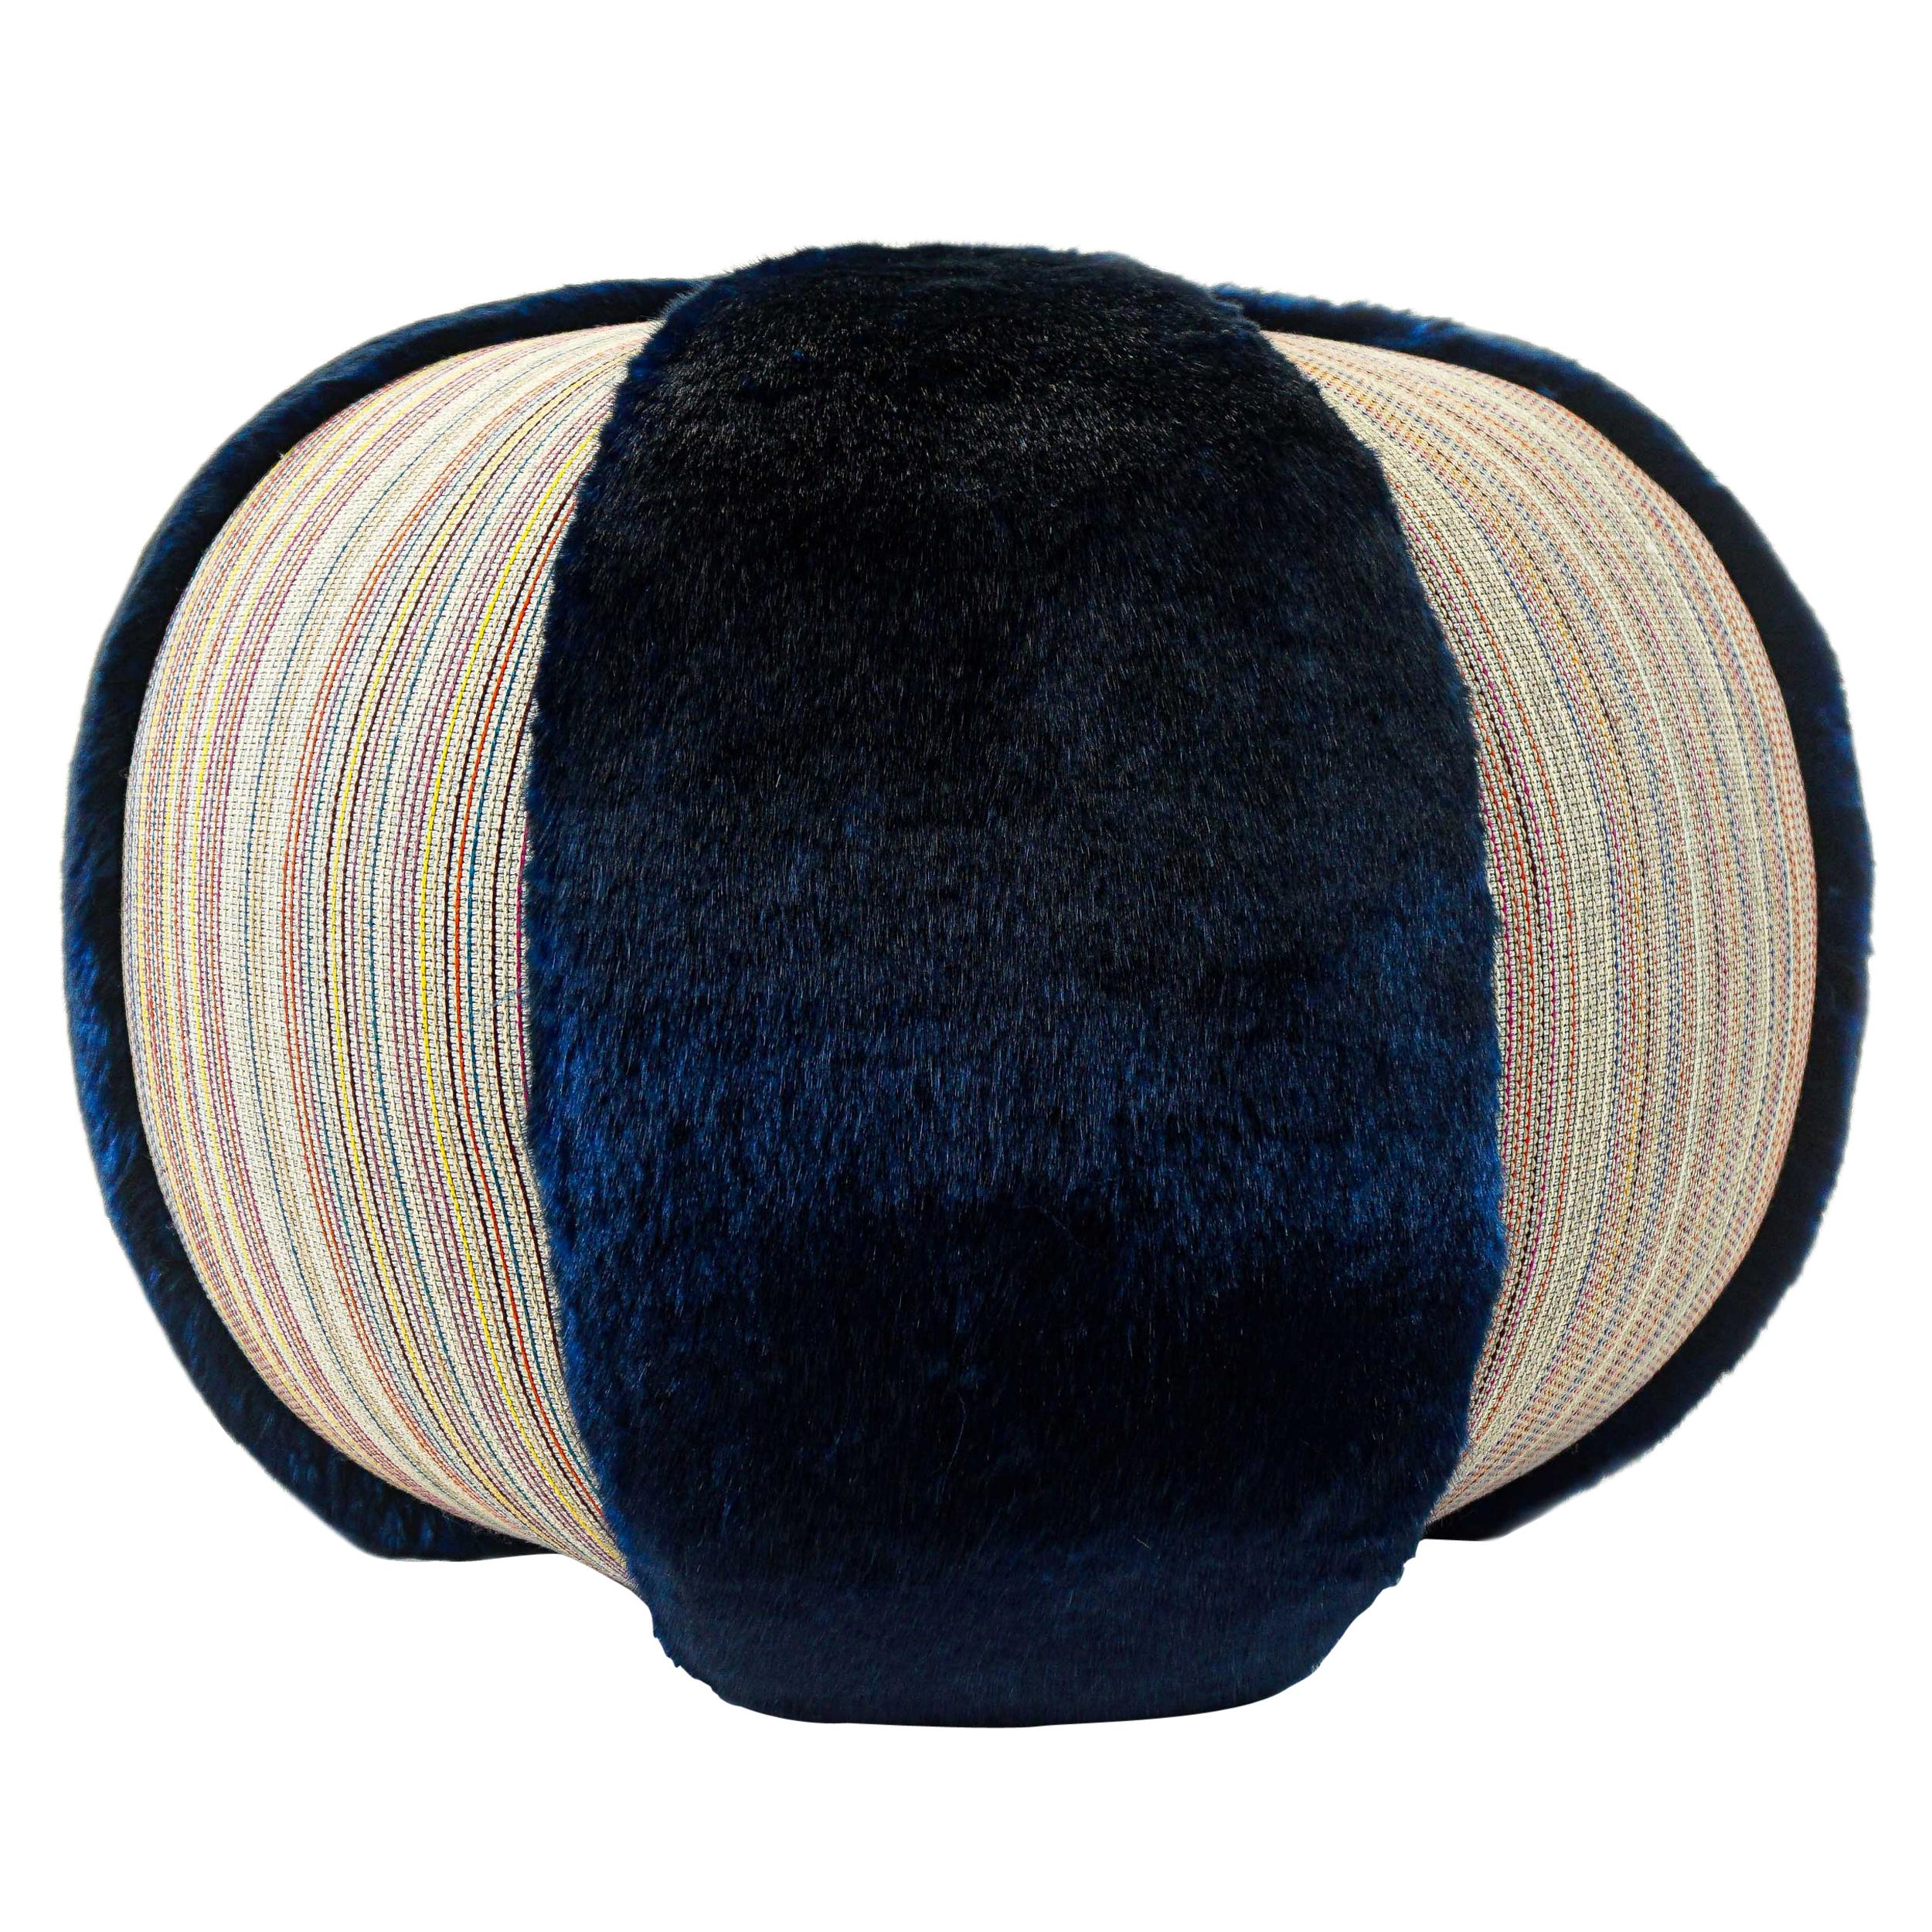 Colorful Stripe Pouf/Ottoman with Vibrant Blue Faux Fur